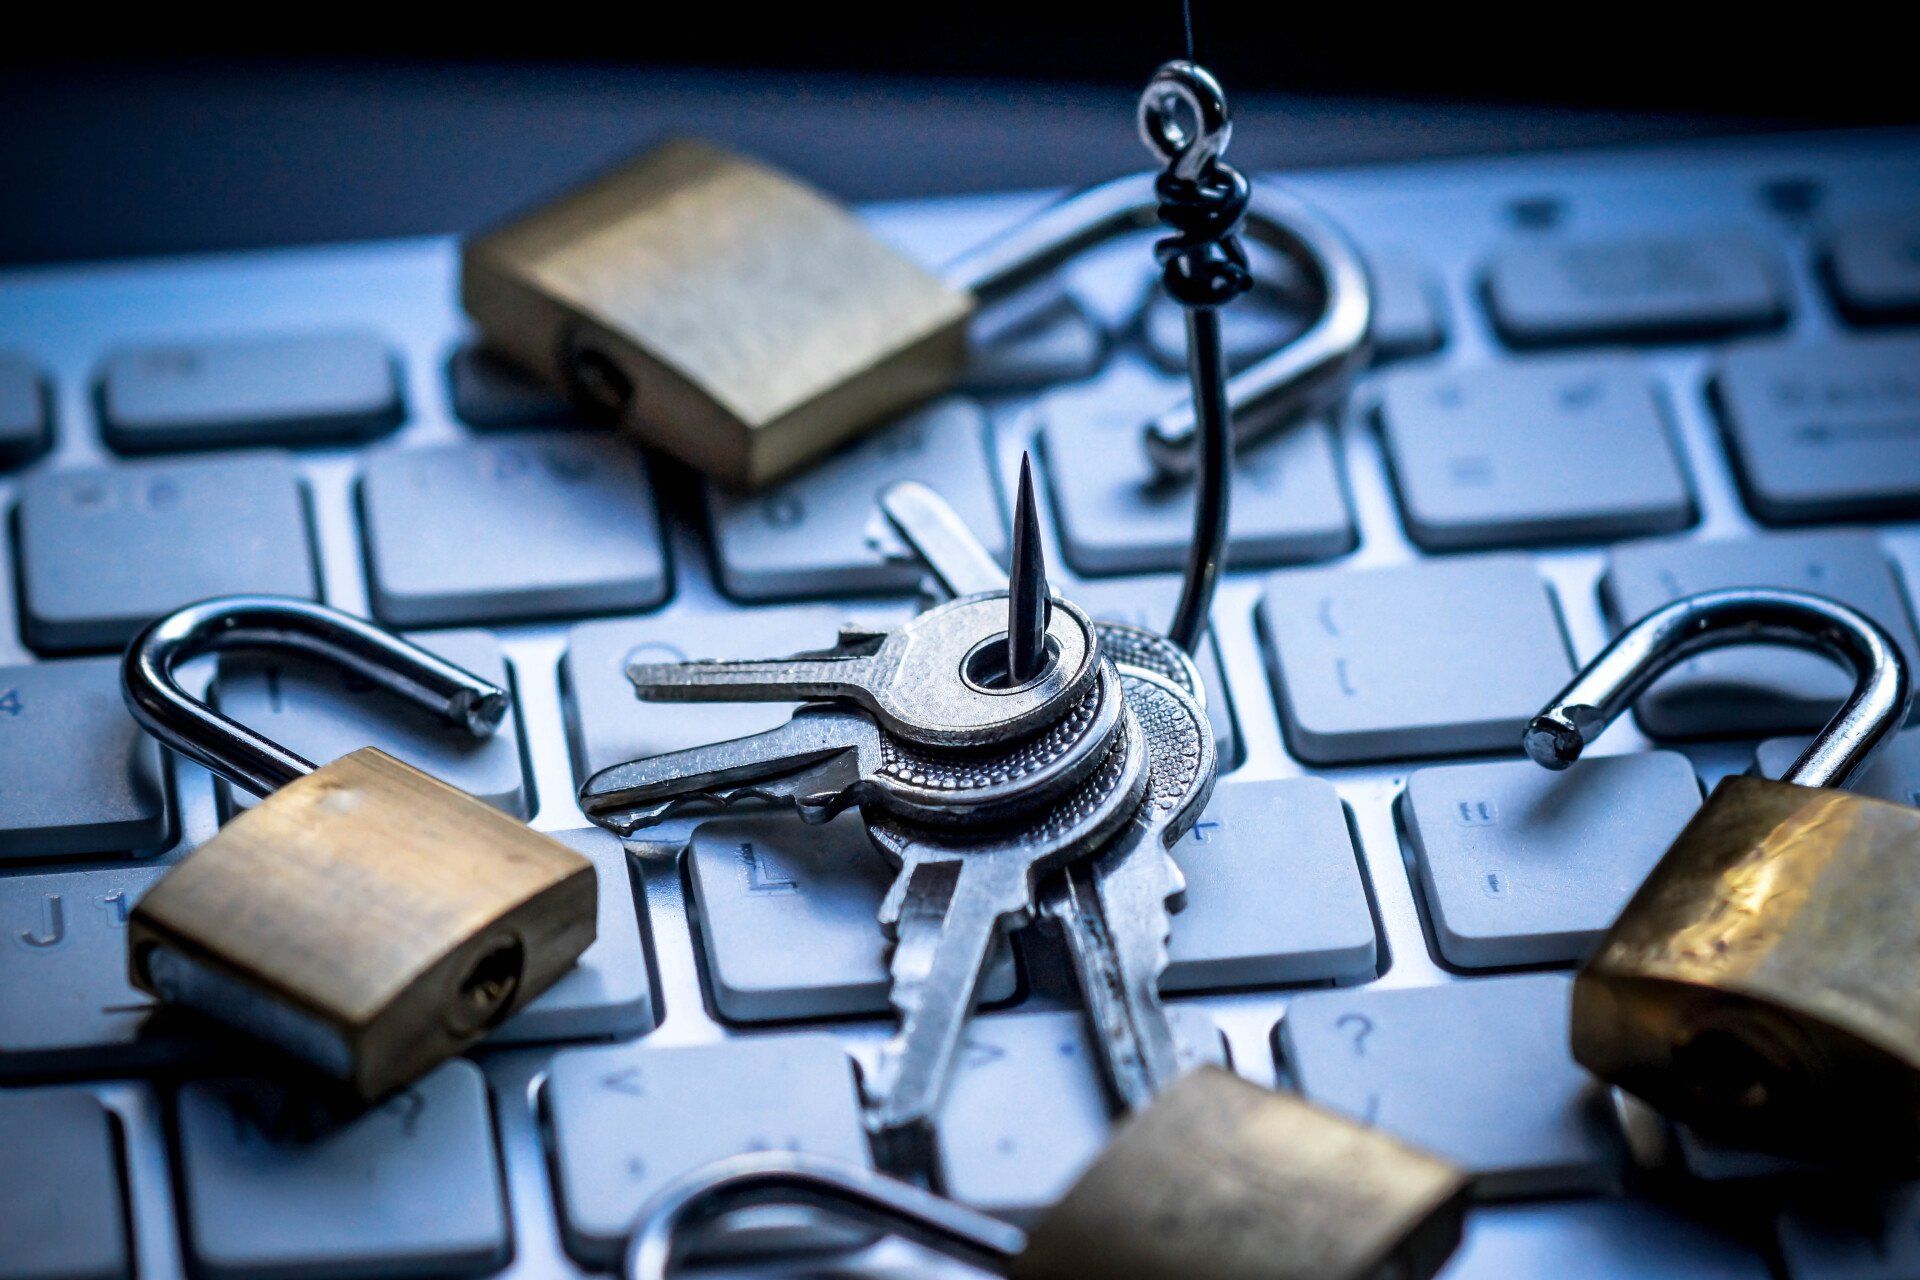 Keys and locks to help Prevent Social Engineering Attacks